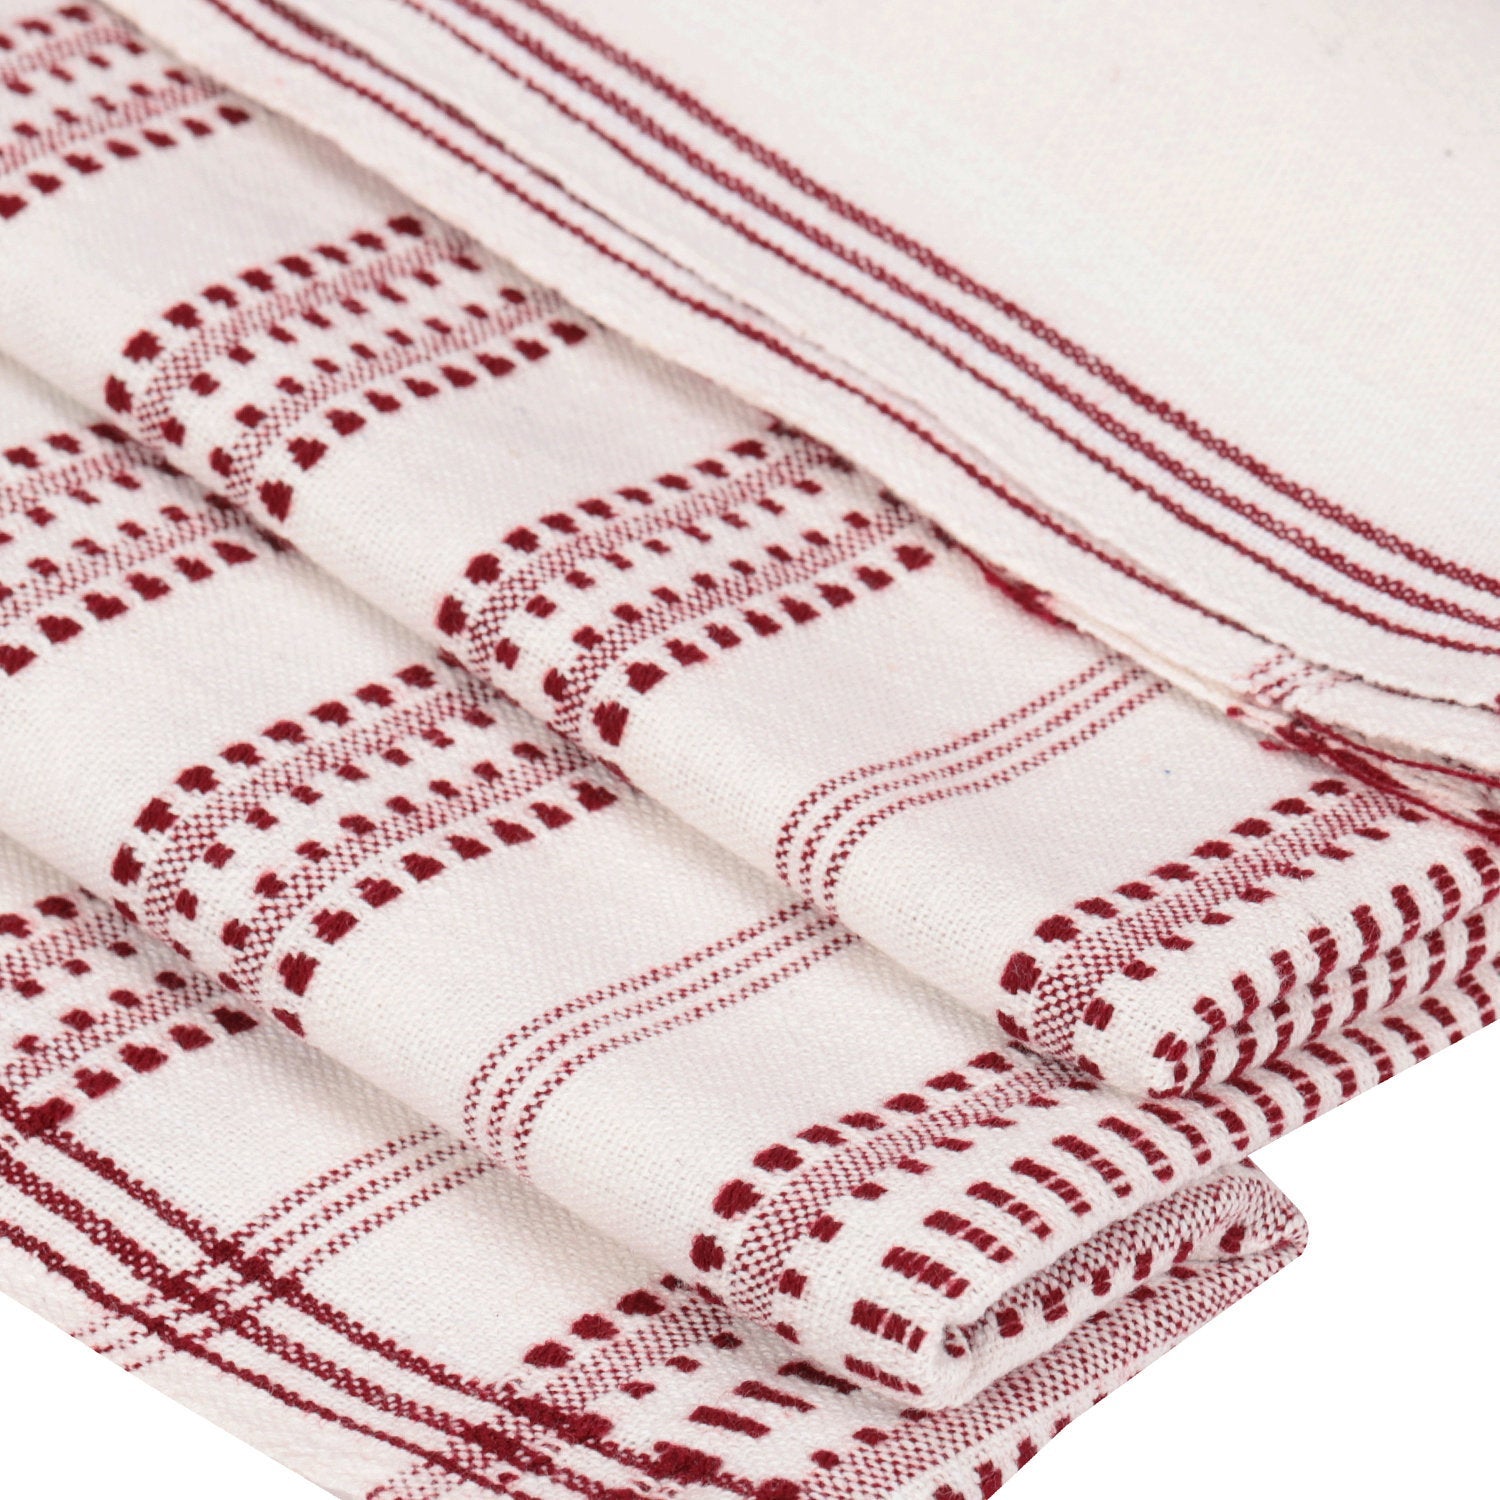 Handwoven Organic Cotton Linen Yoga Towel, Beach,Bath and Sauna Towel - Use for Gym/Exercise/Wedding/Christmas Gift/Travel/Stole